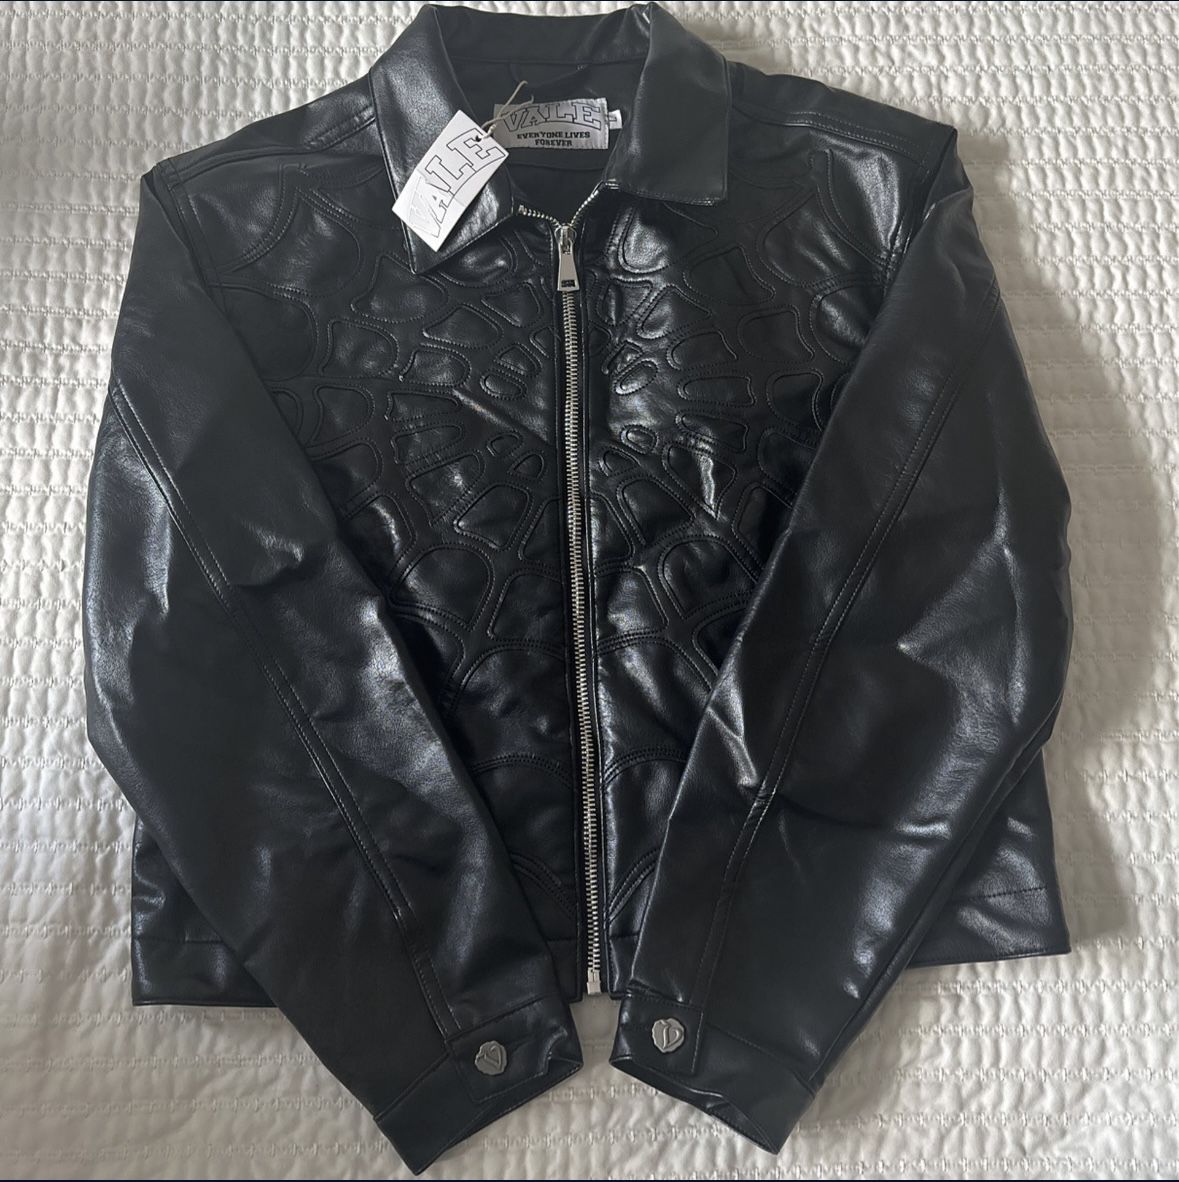 Vale leather jacket